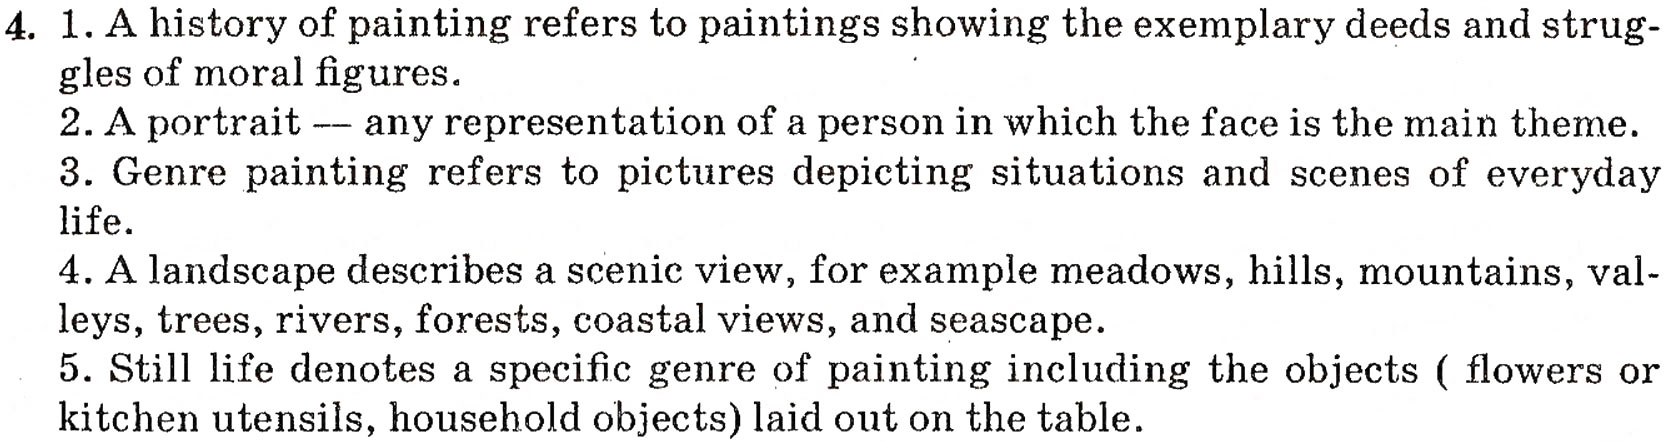 Завдання № 4 - Lessons 3-4. Genres of Painting - ГДЗ Англійська мова 10 клас А.М. Несвіт 2010 - 9 рік навчання